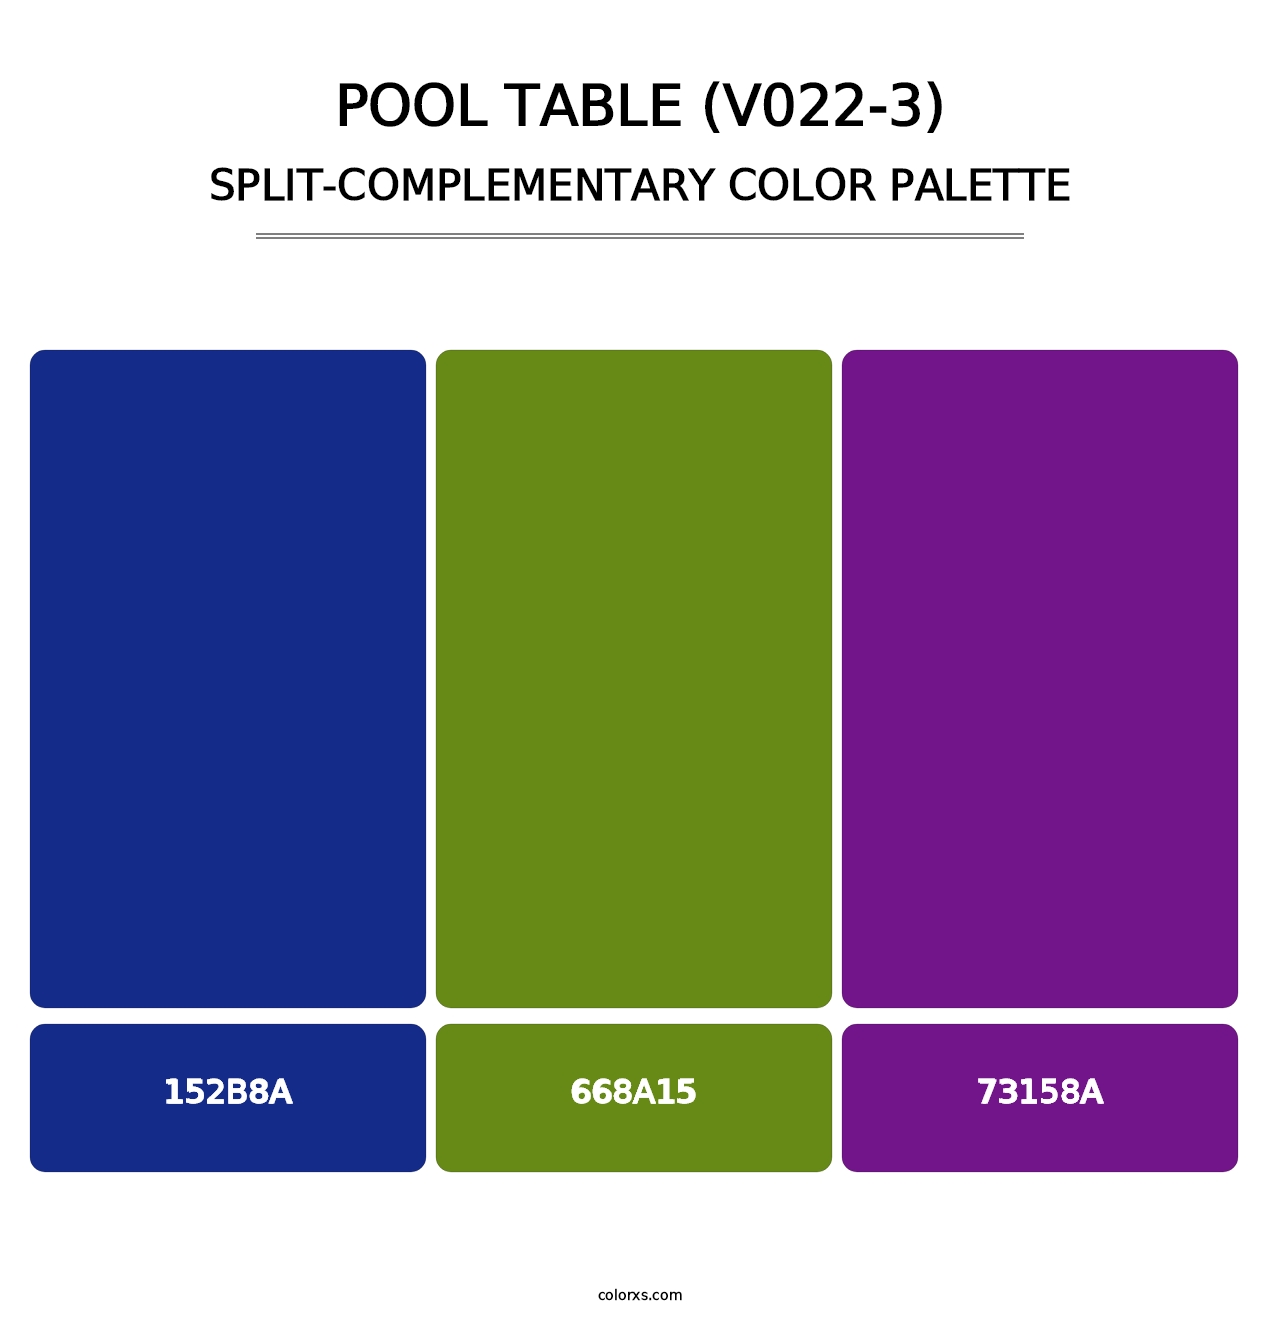 Pool Table (V022-3) - Split-Complementary Color Palette